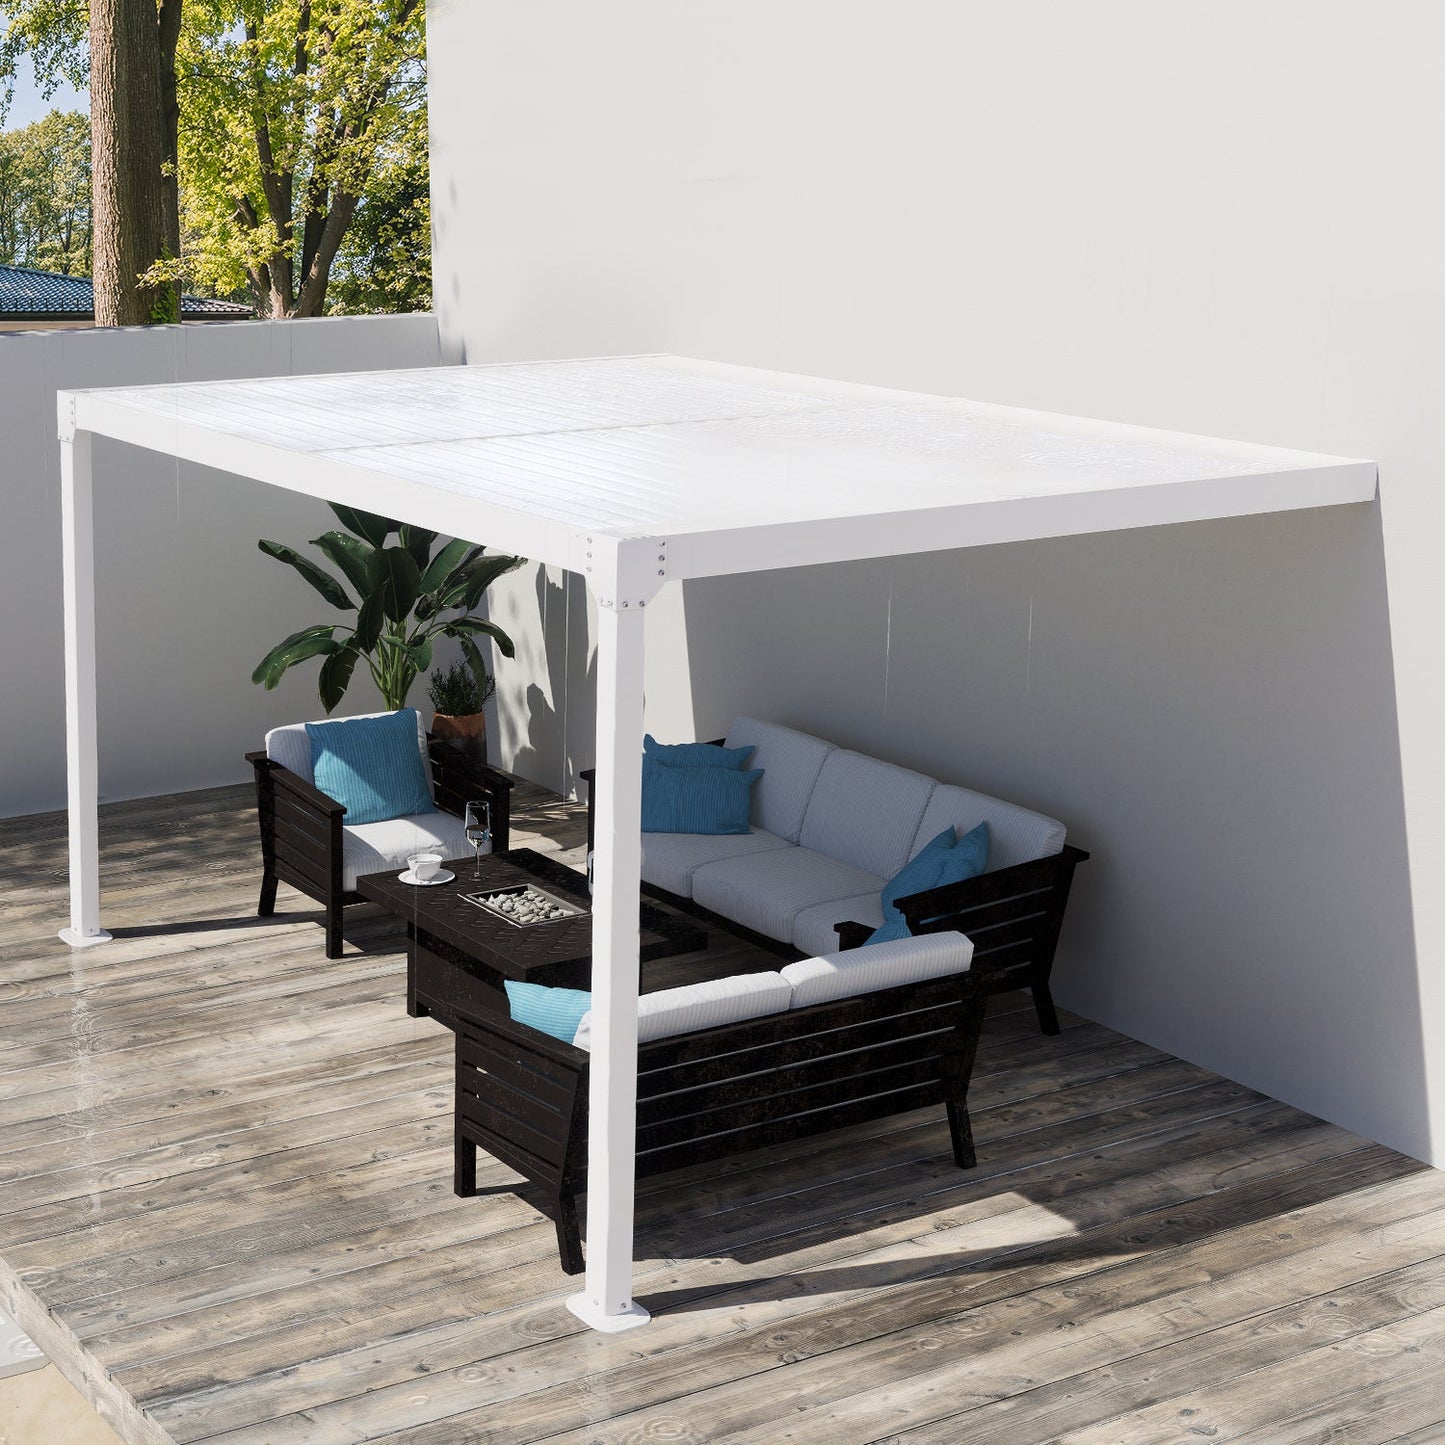 13 x 10 ft. Outdoor Aluminum Wall Mounted Louvered Pergola, Sun Shade Shelter with 2 Adjustable Panels  - Dark Gray/White Louvered Pergola Aoodor LLC   